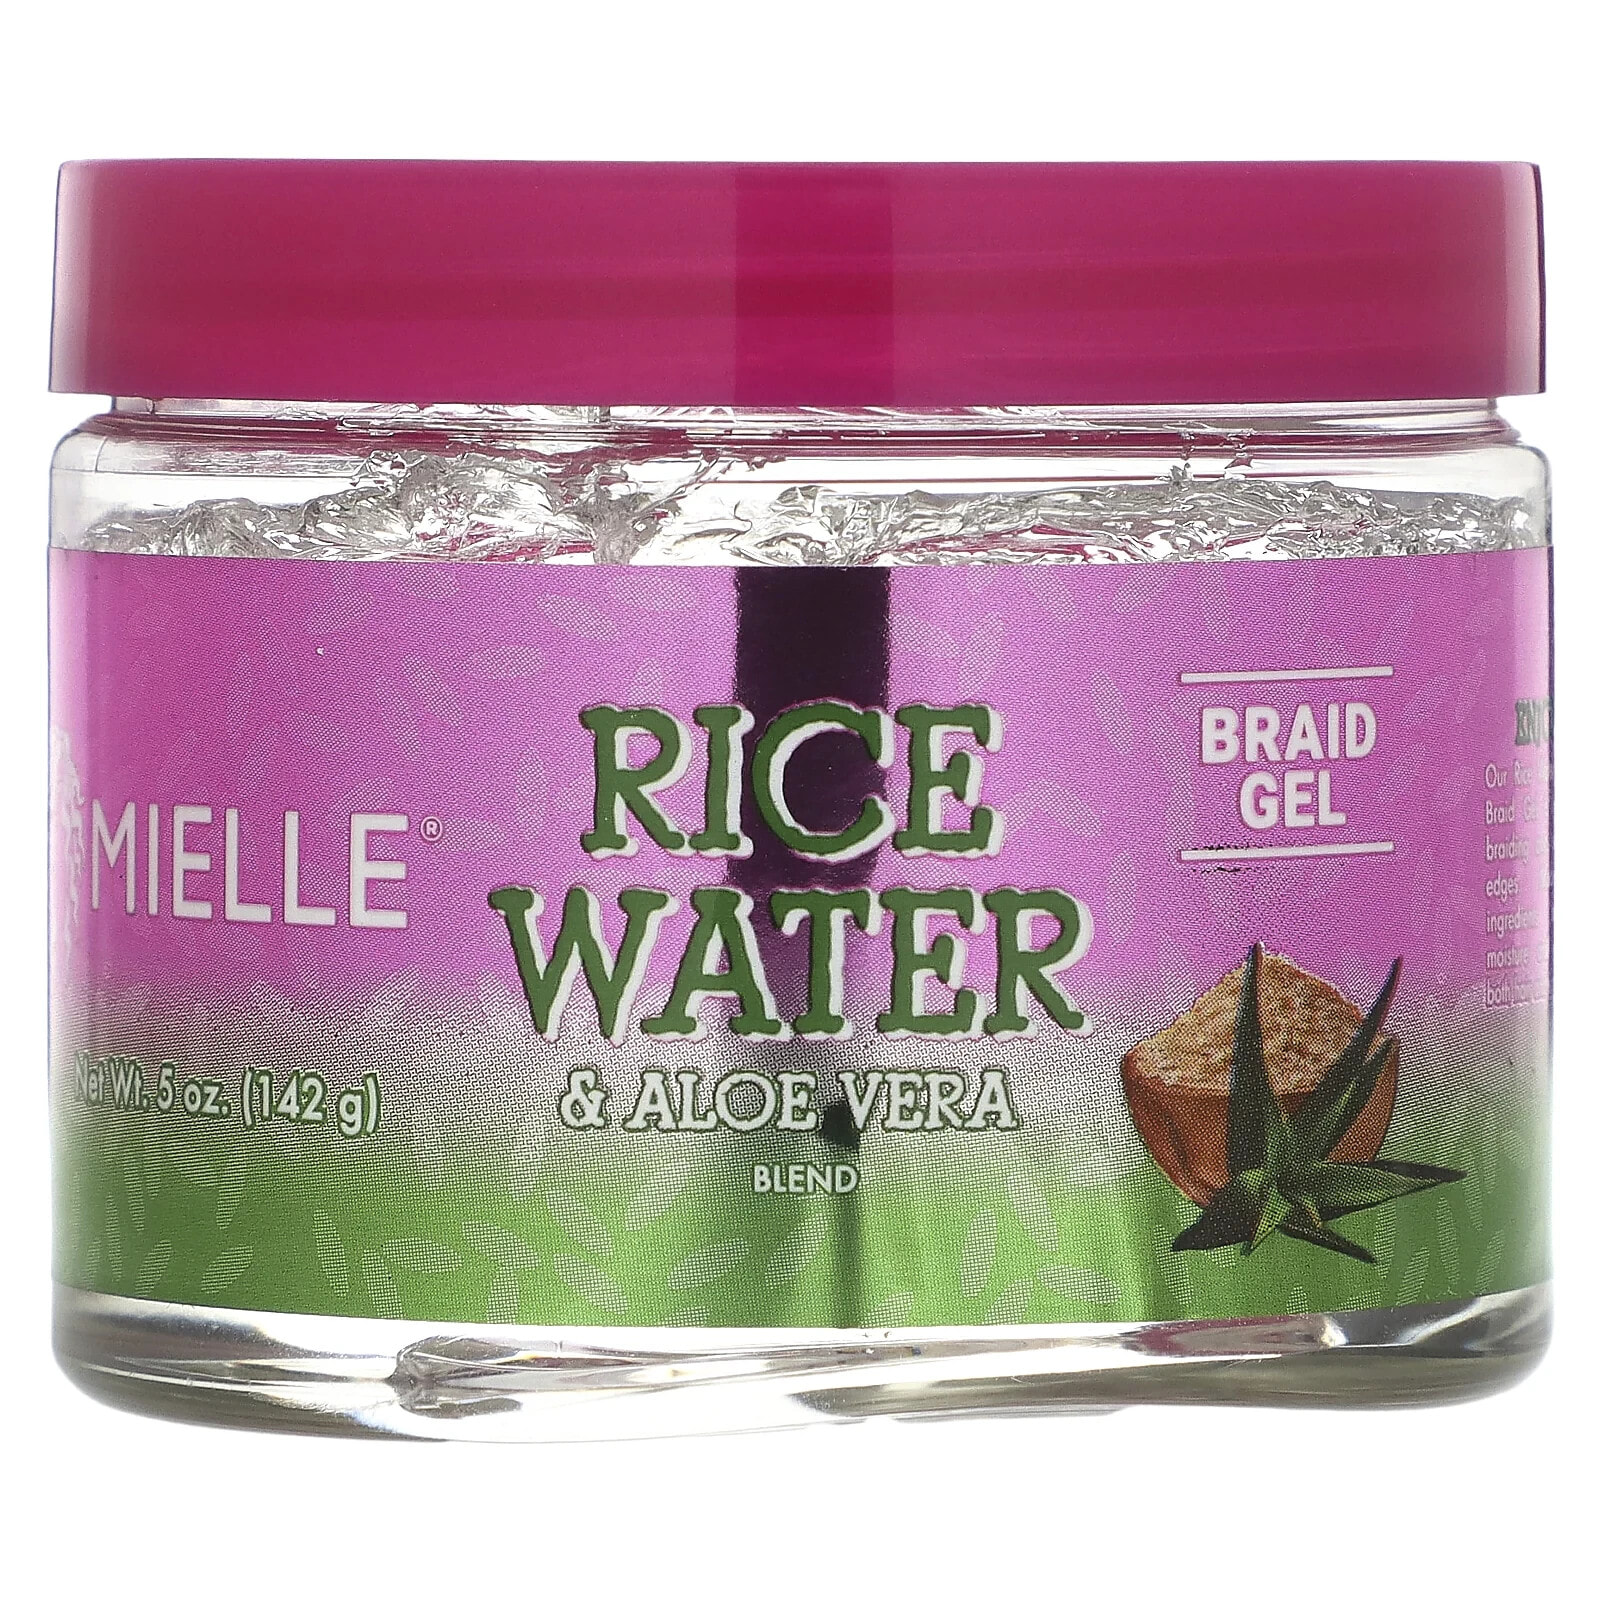 Rice Water & Aloe Vera Blend, Braid Gel, 5 oz (142 g)